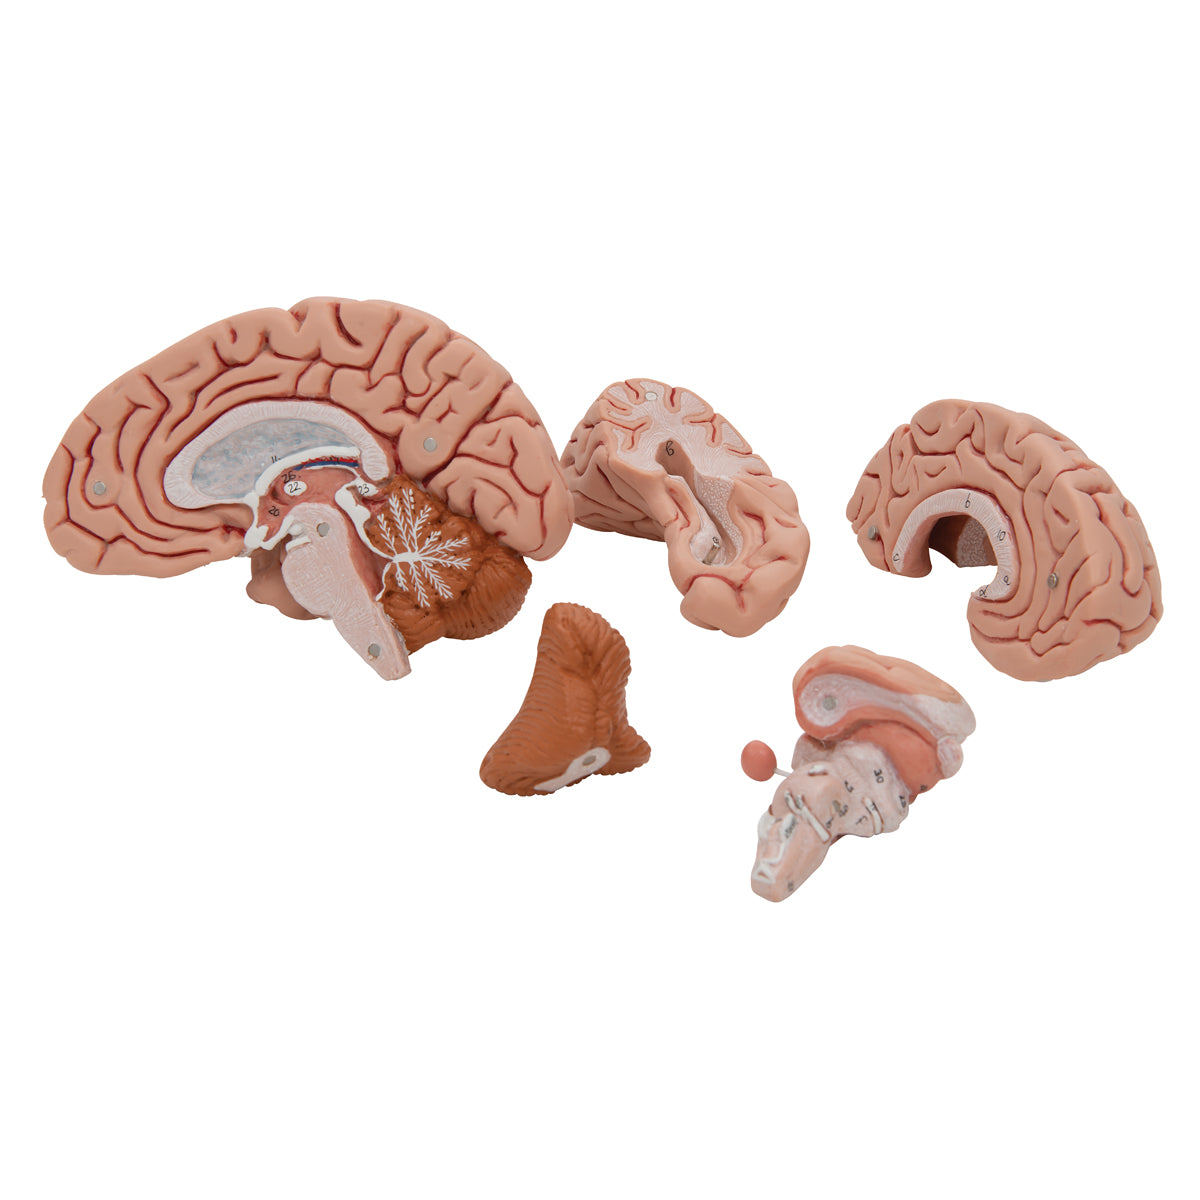 C18 Classic Human Brain Model, 5 part - 3B Smart Anatomy